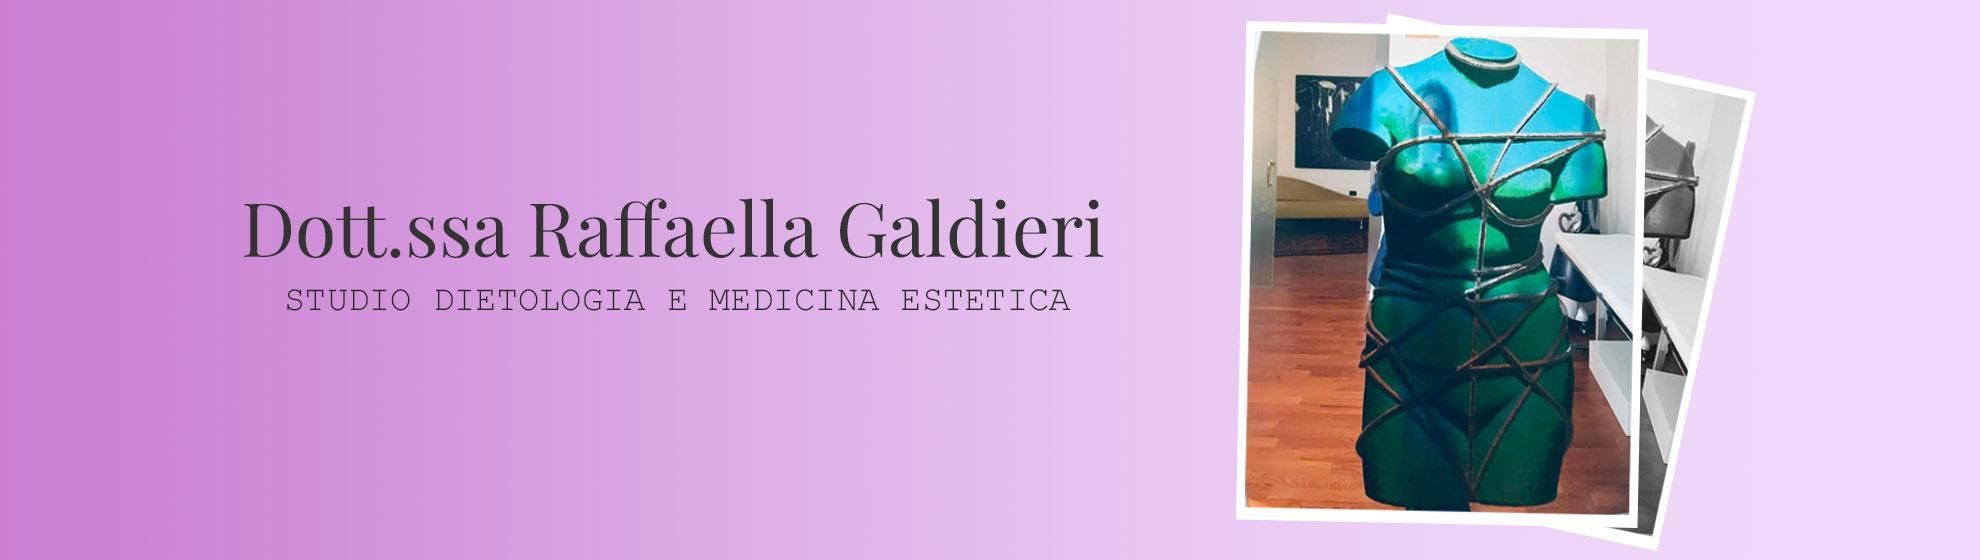 Aesthetic Medical Center Dott.ssa Raffaella Galdieri